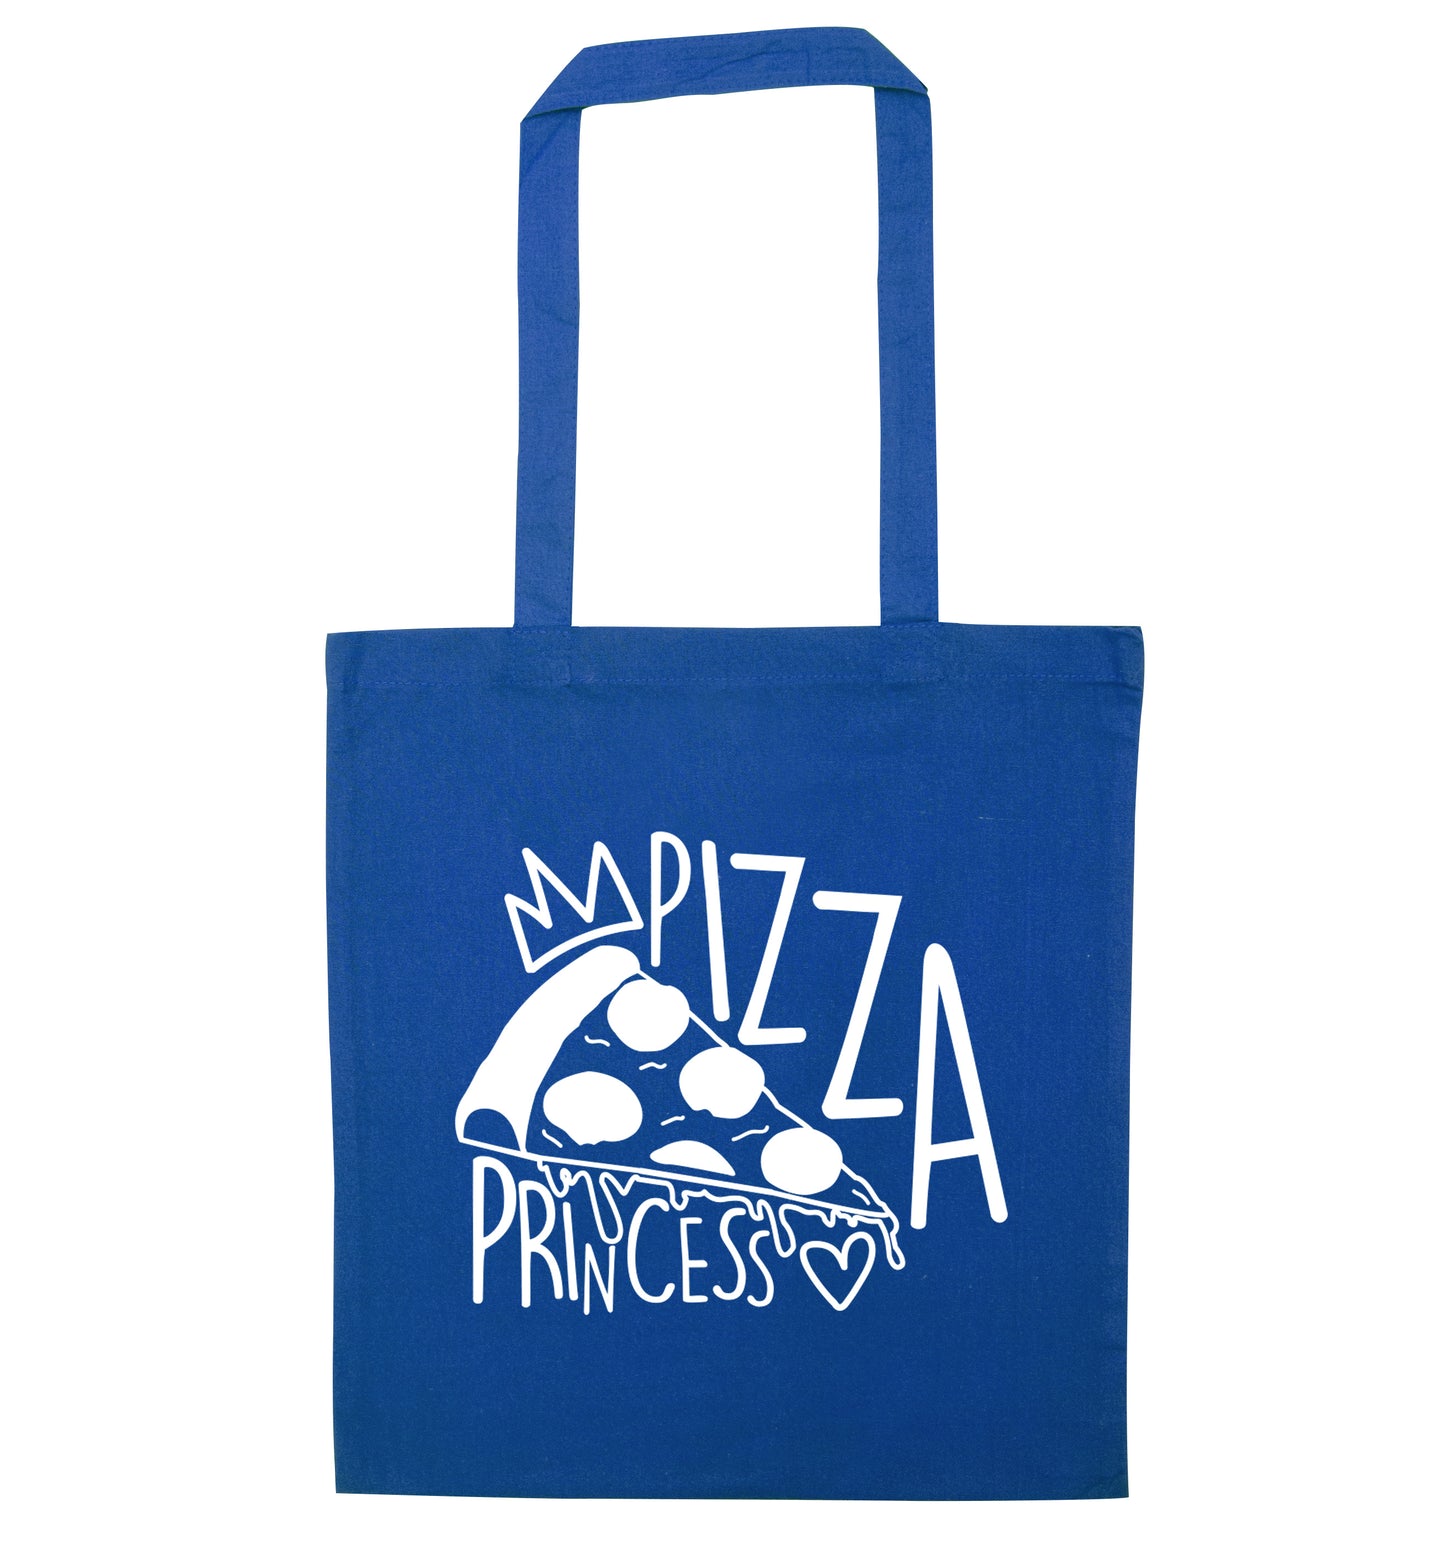 Pizza Princess blue tote bag